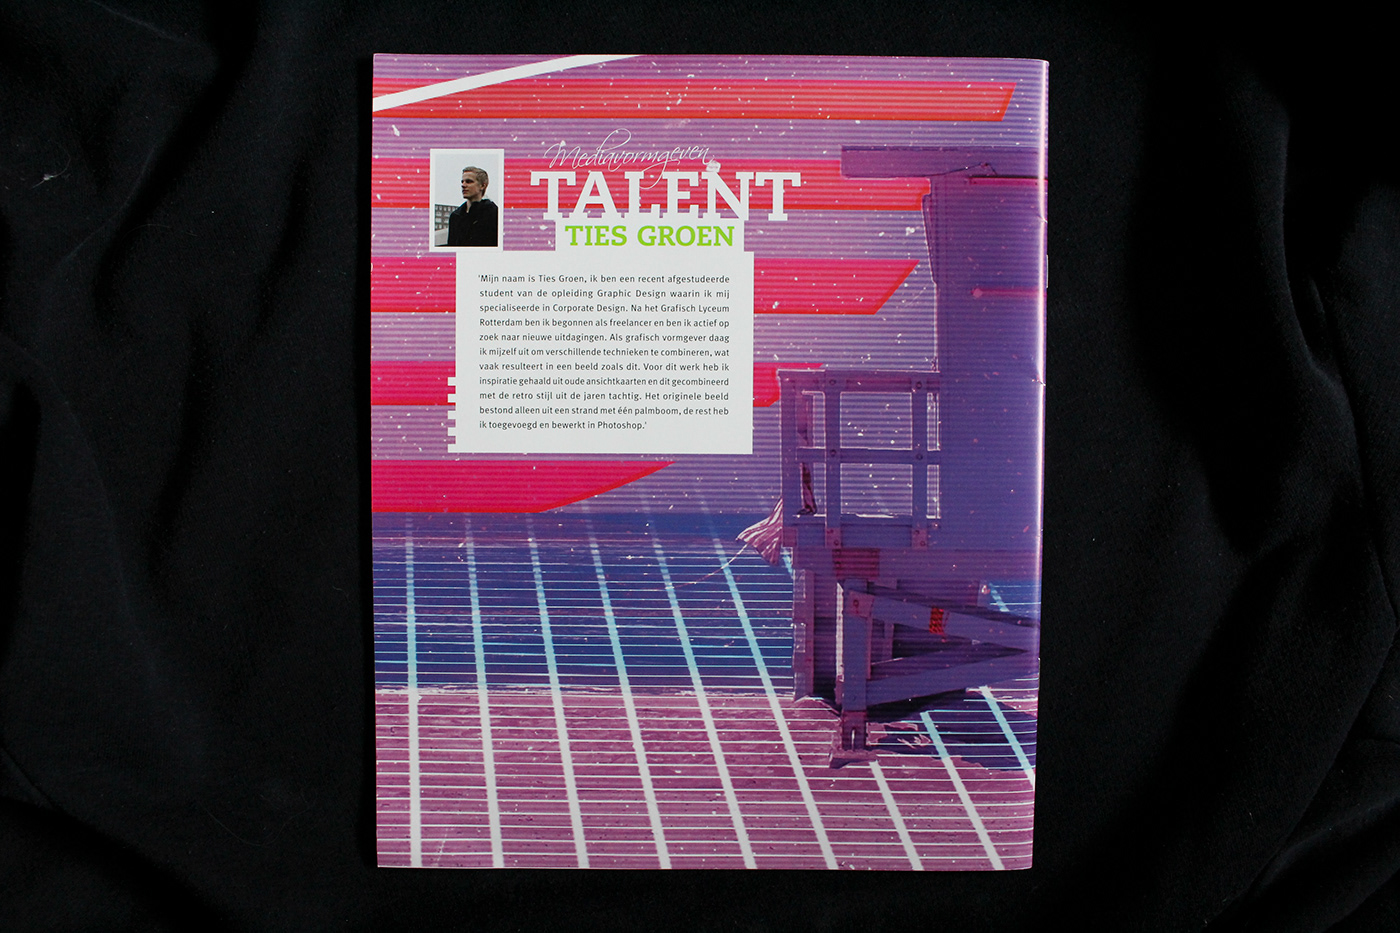 Retro 80s postcard retrowave Synthwave magazine publication design art artist